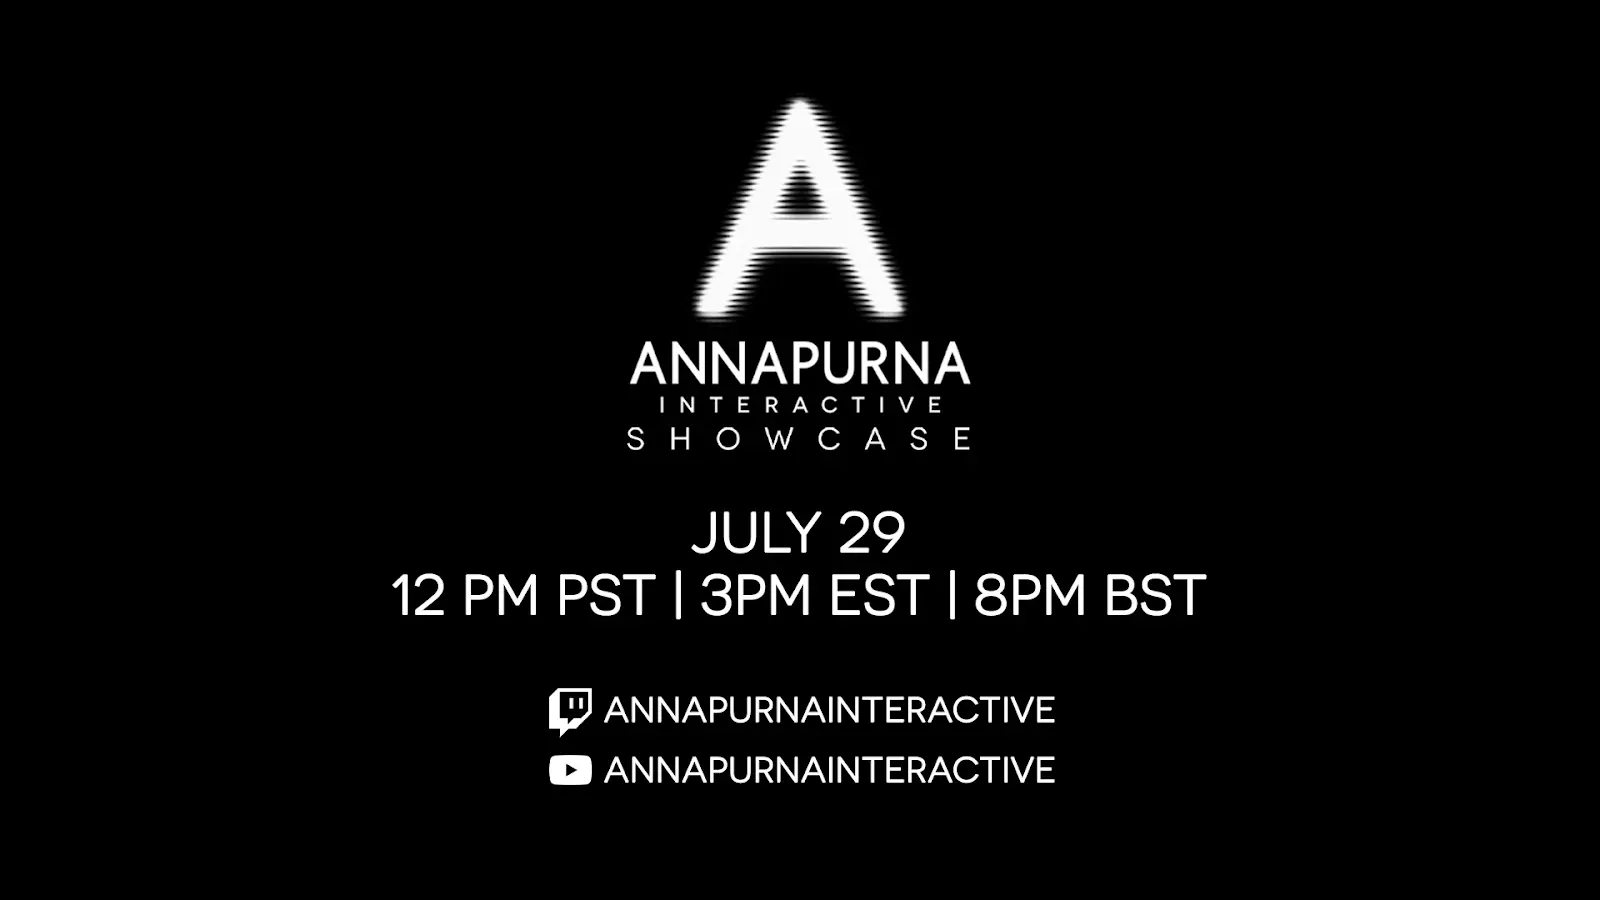 The Annapurna Interactive Showcase